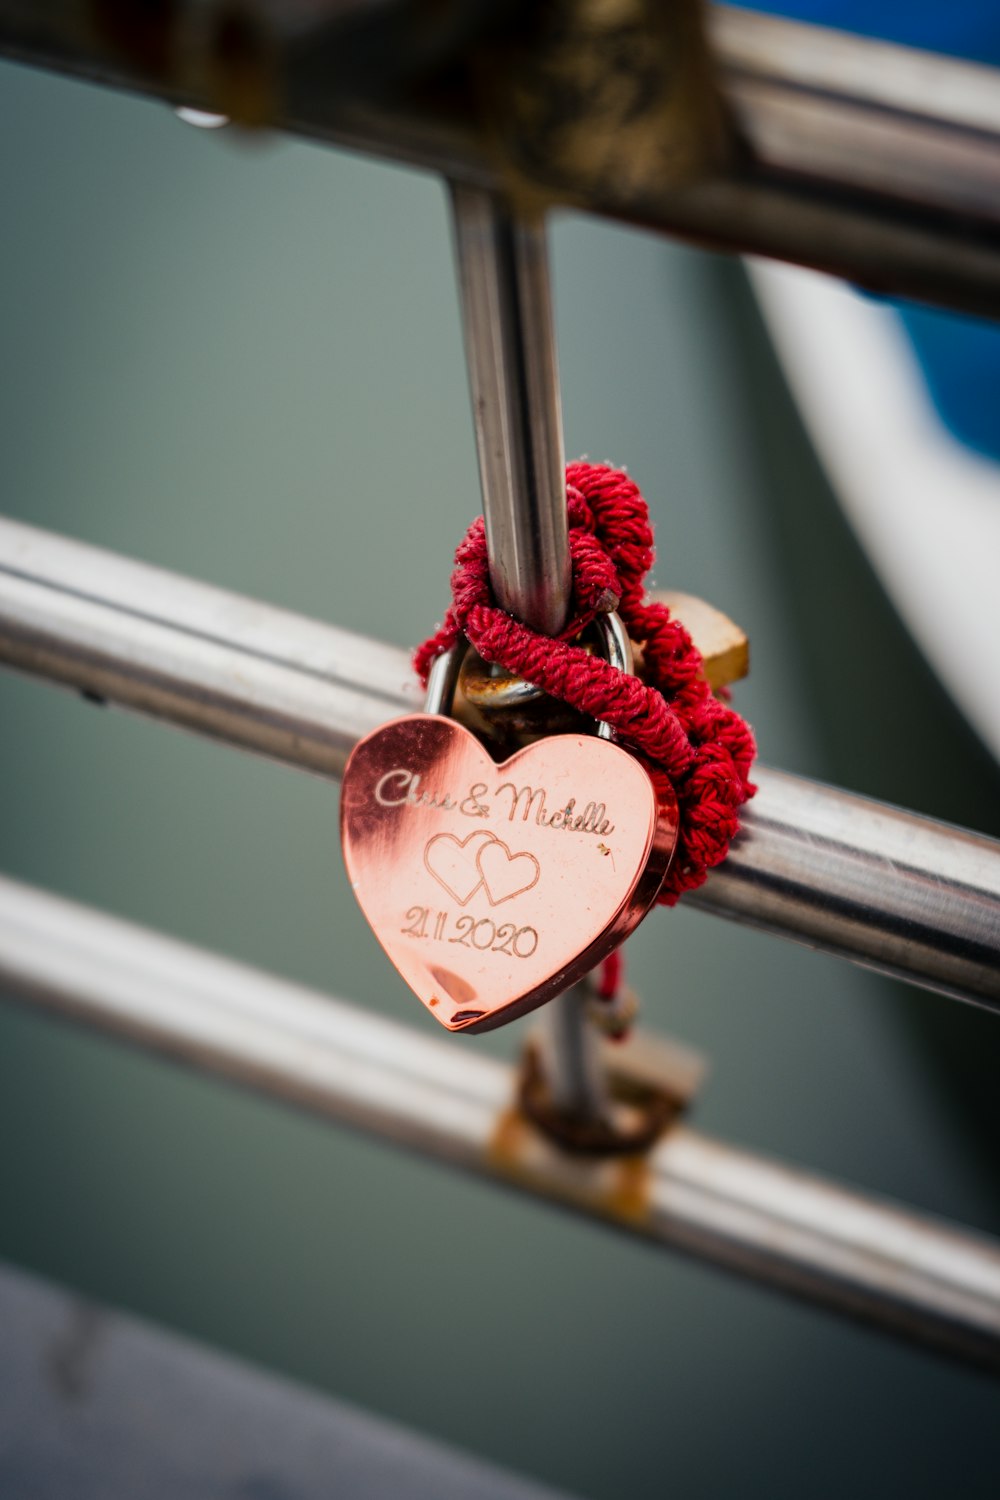 a close up of a heart shaped padlock